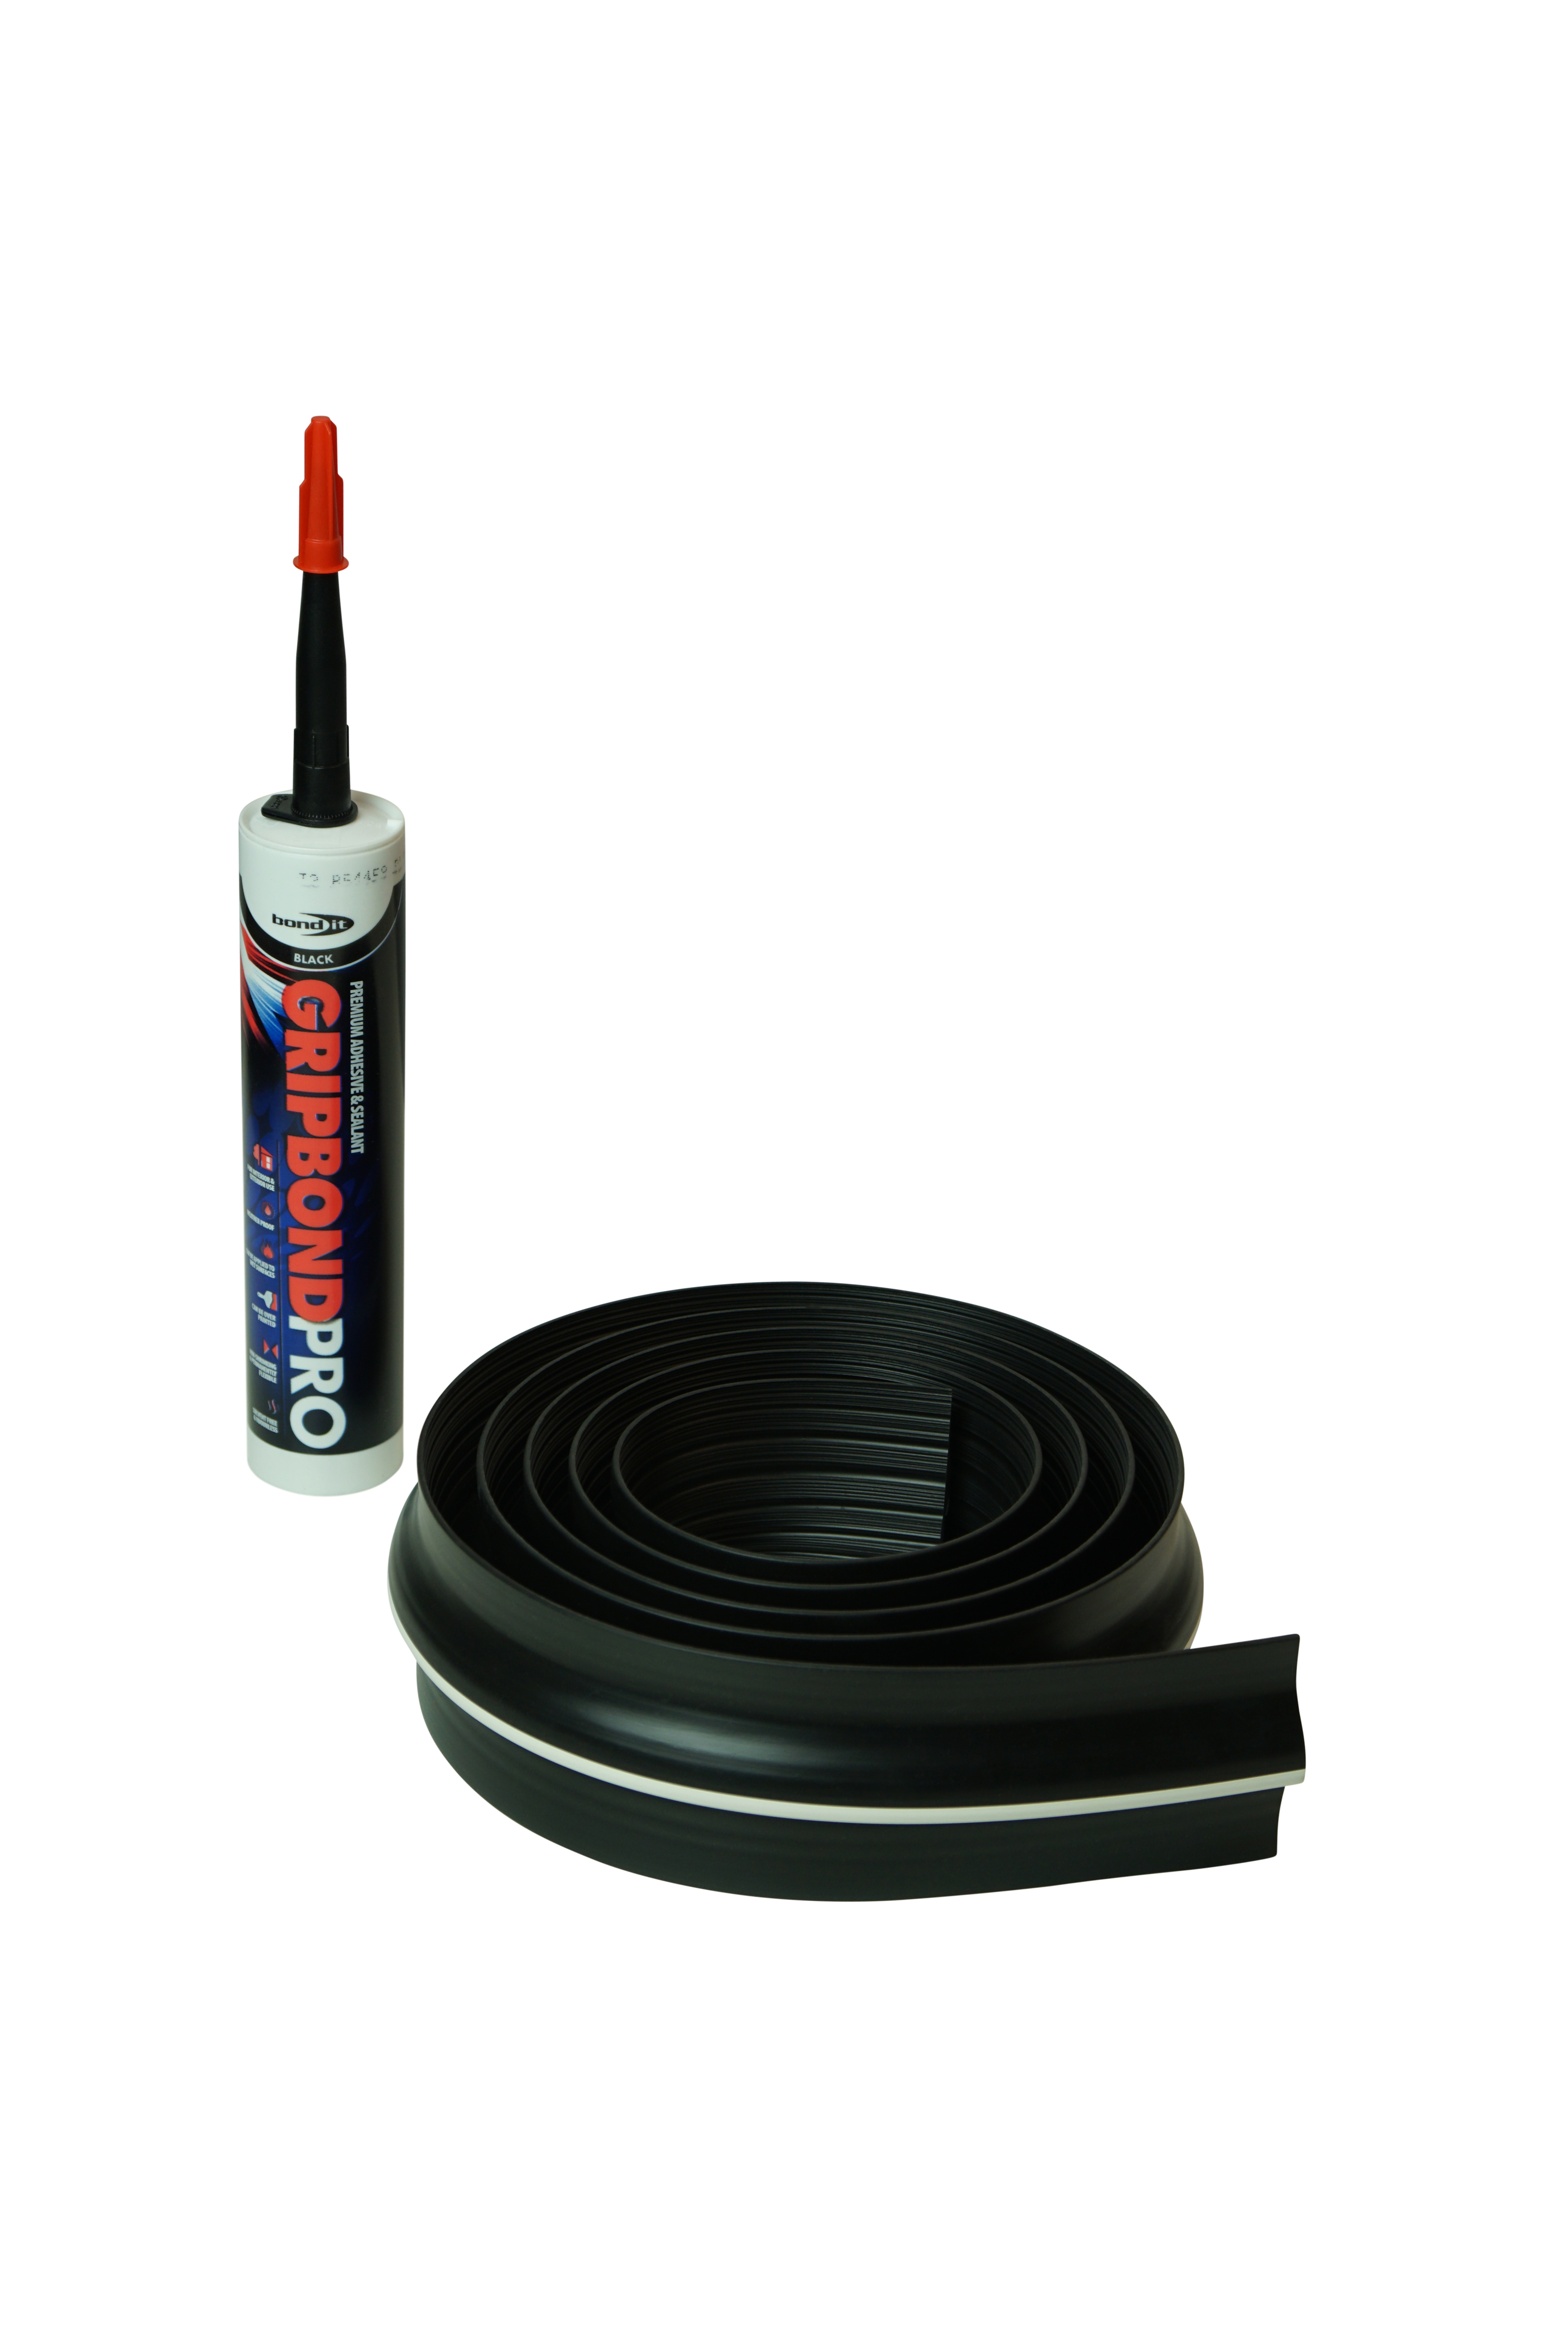 Garage Threshold Seal Black 2515mm, c/w Fixing Adhesive